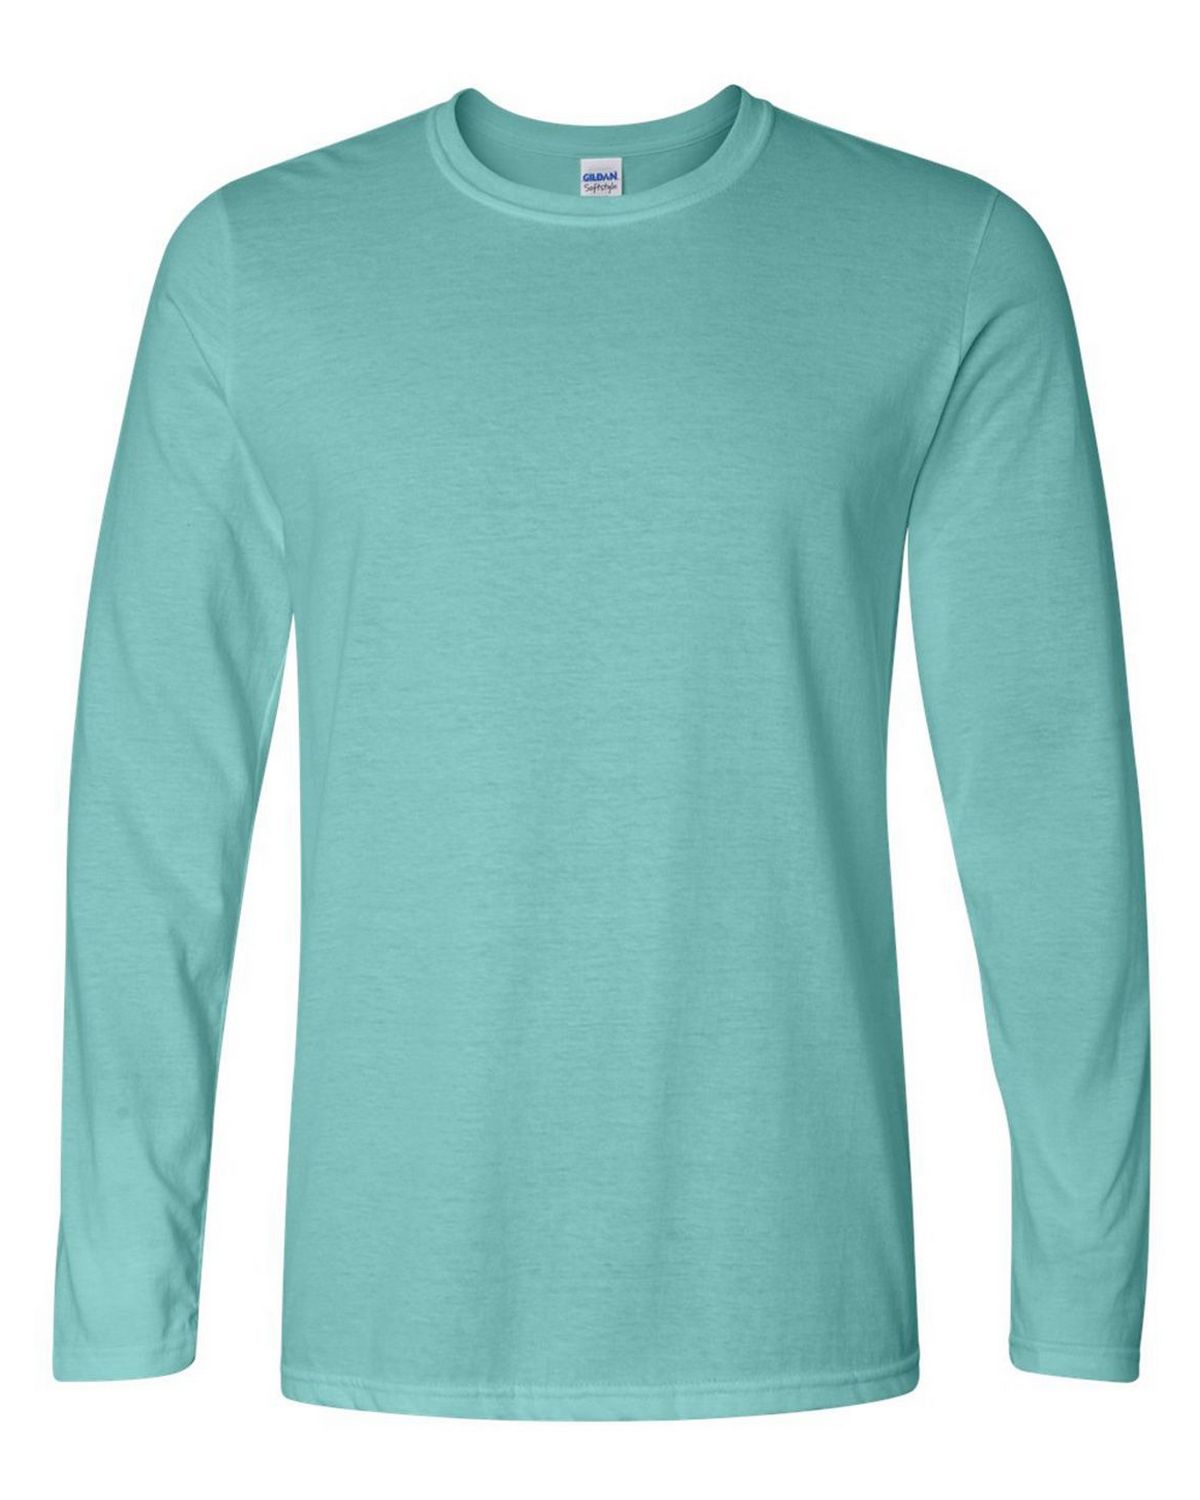 Gildan 64400 Adult Long Sleeve T Shirt - Shop at